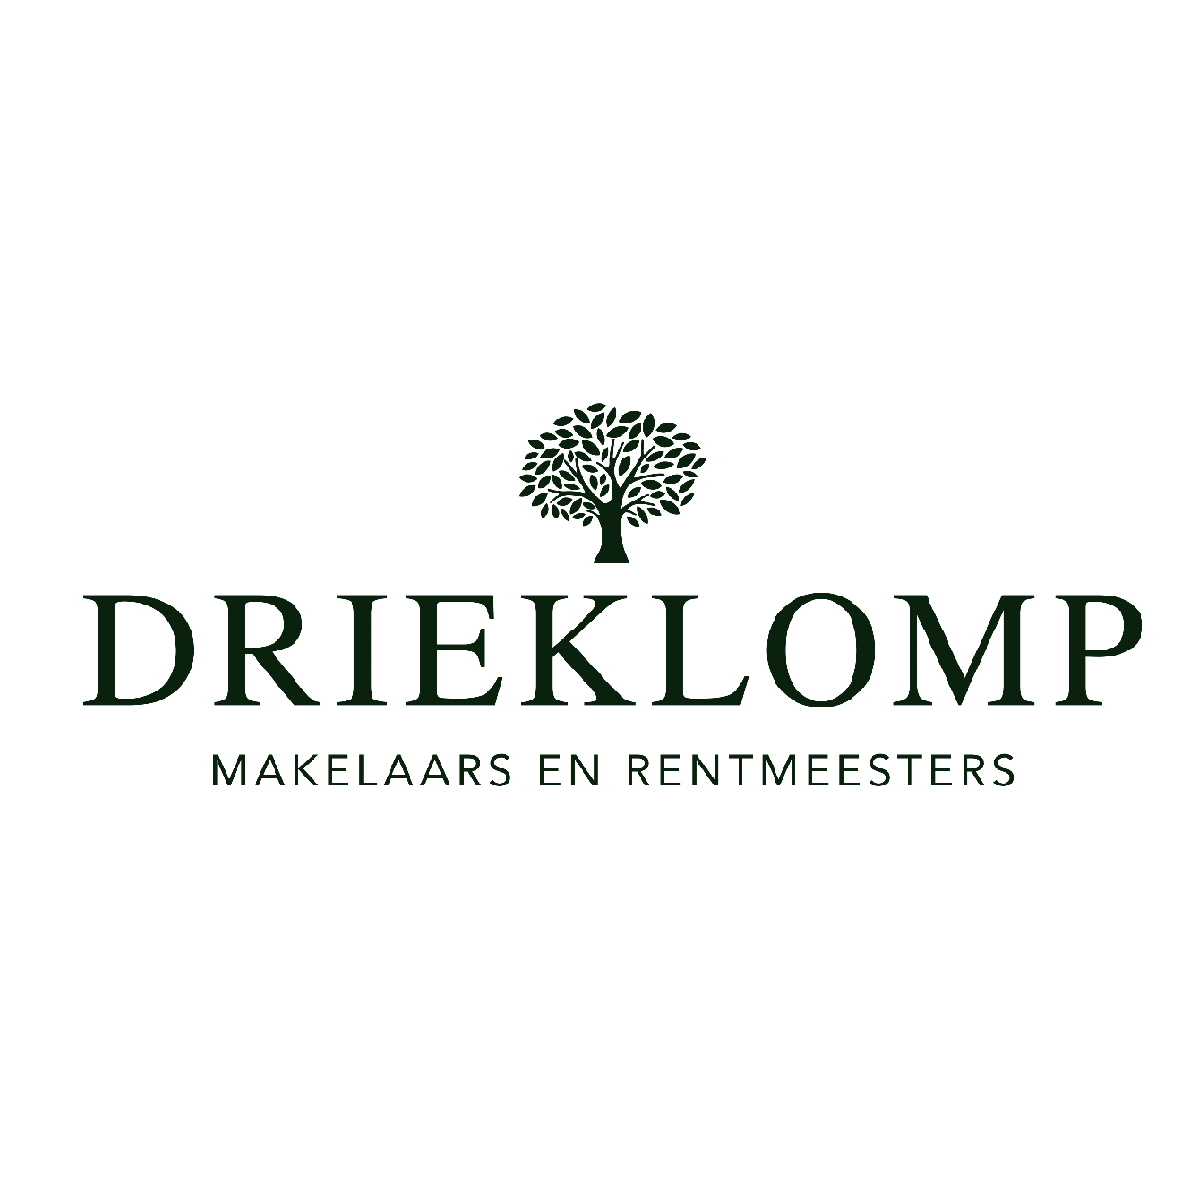 Drieklomp logo